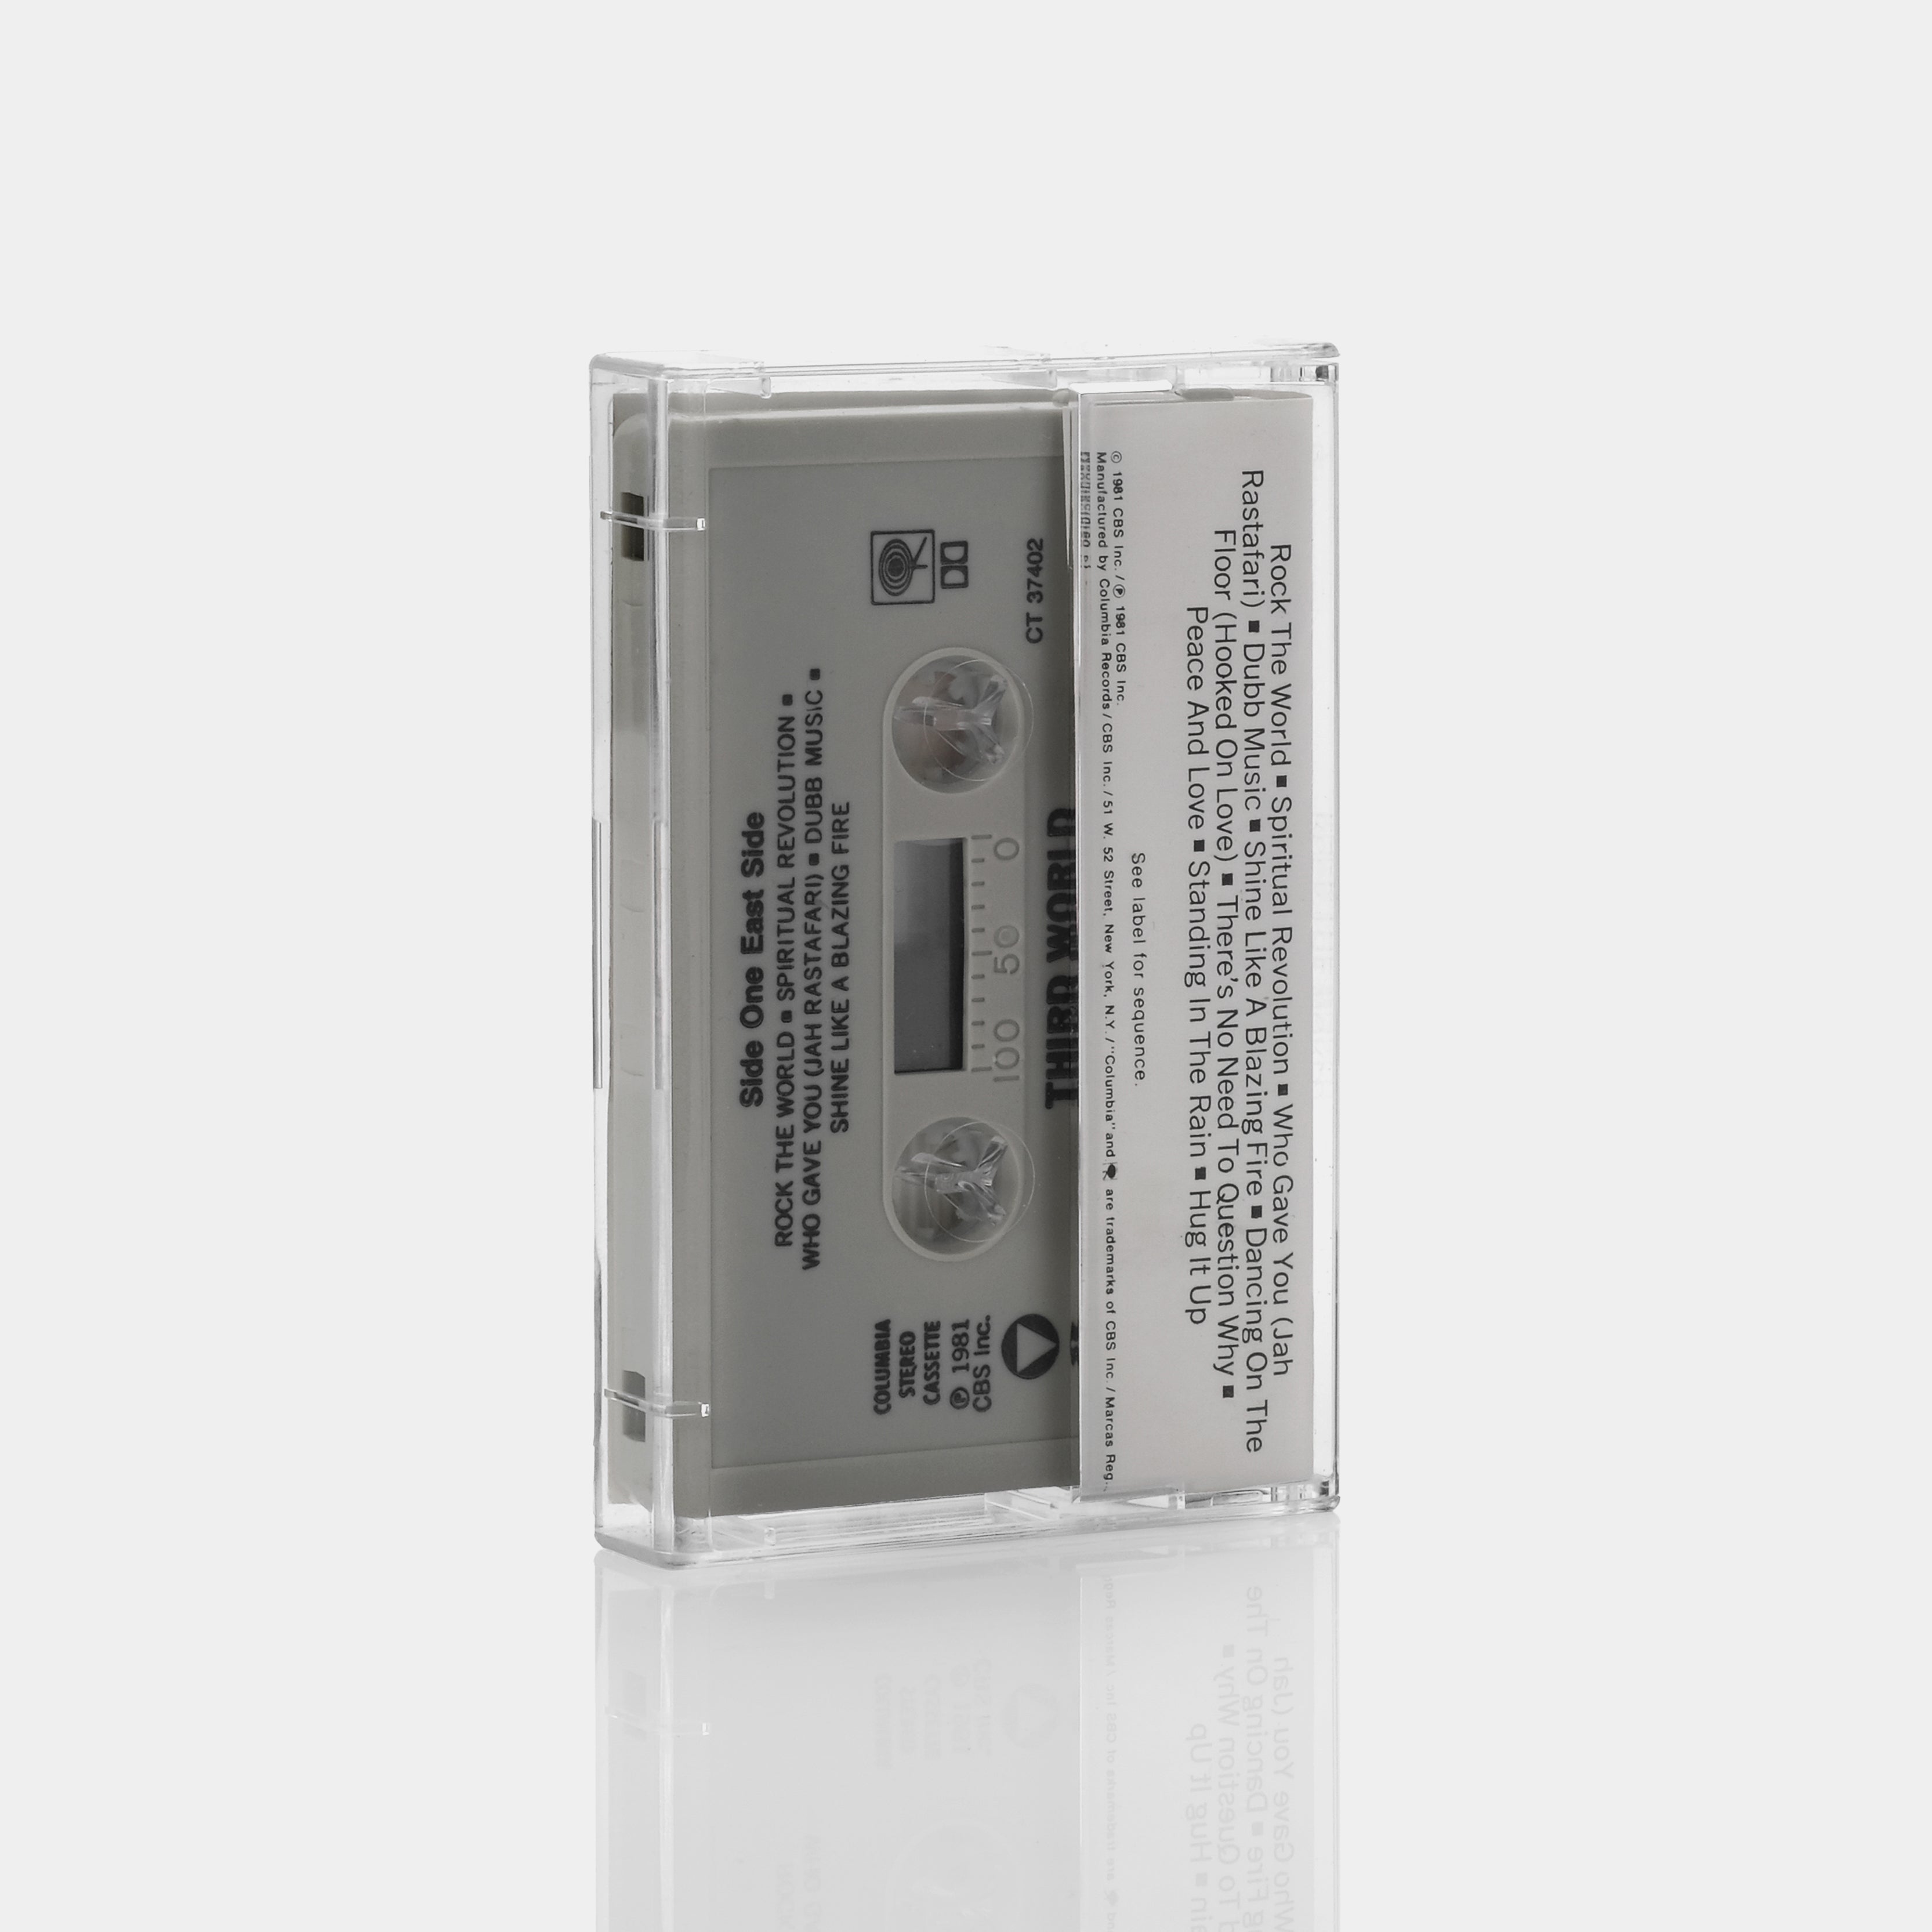 Third World - Rock The World Cassette Tape